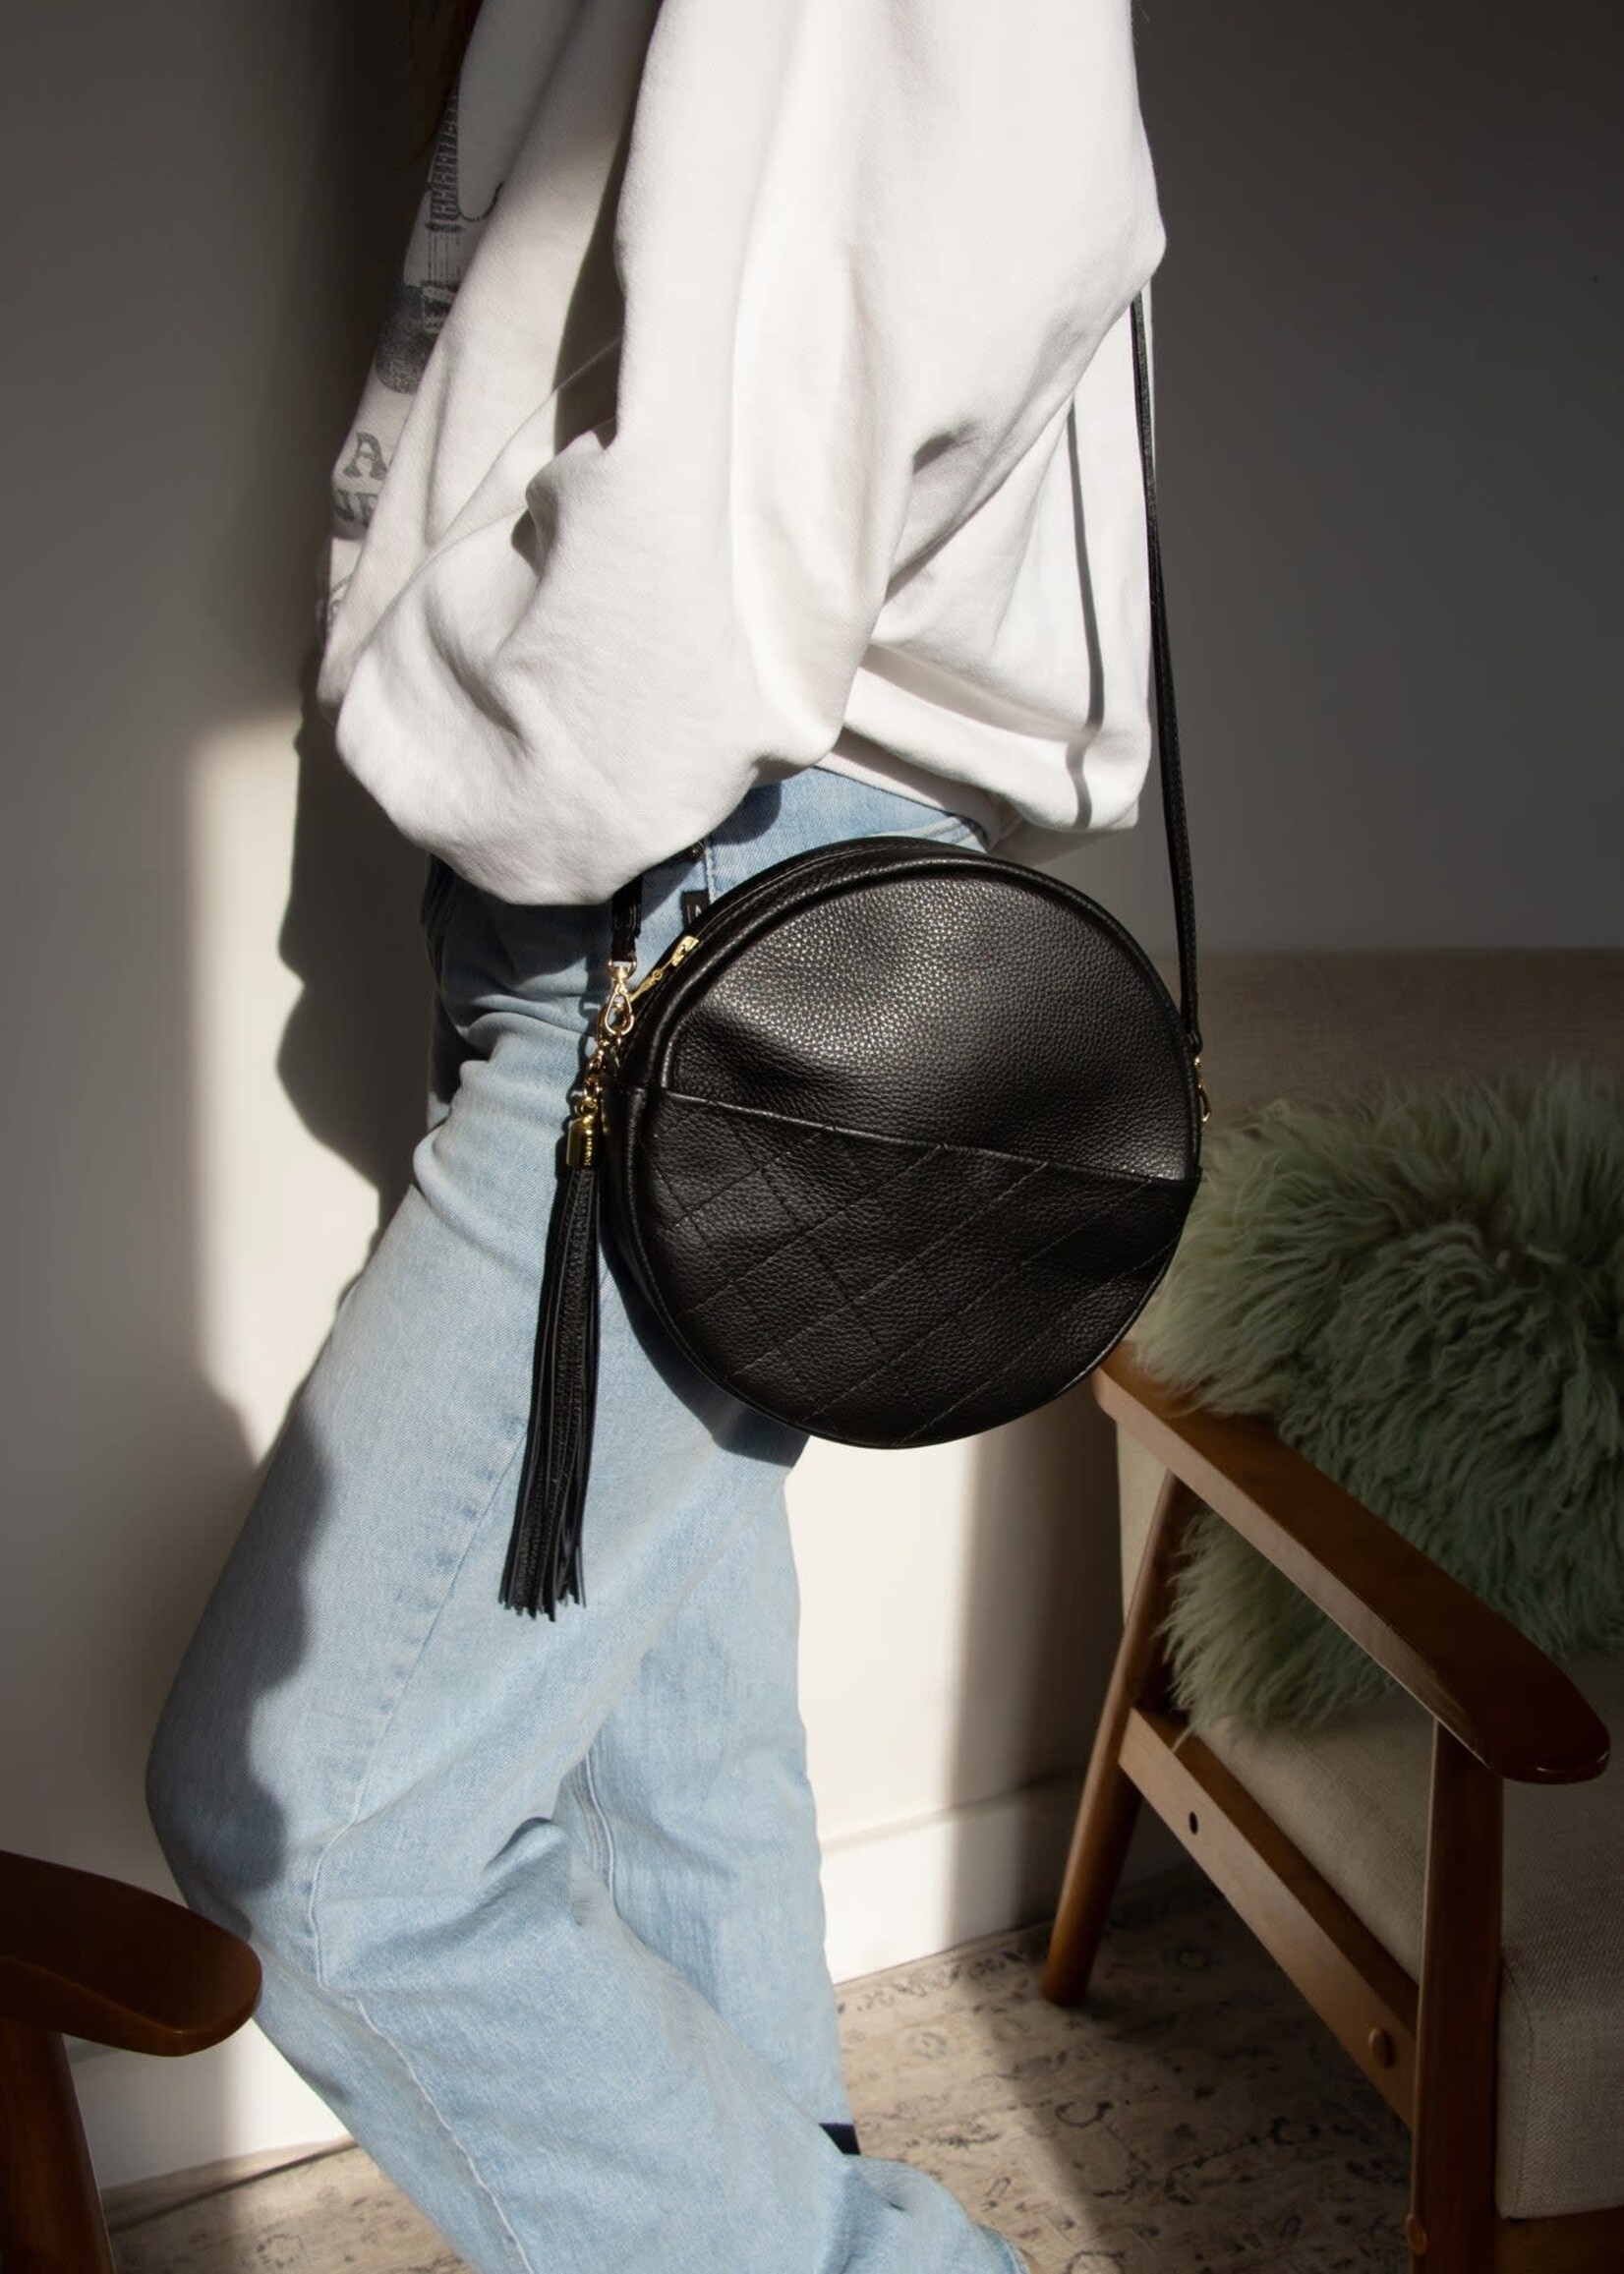 BRAVE LEATHER CHIARA leather circle purse